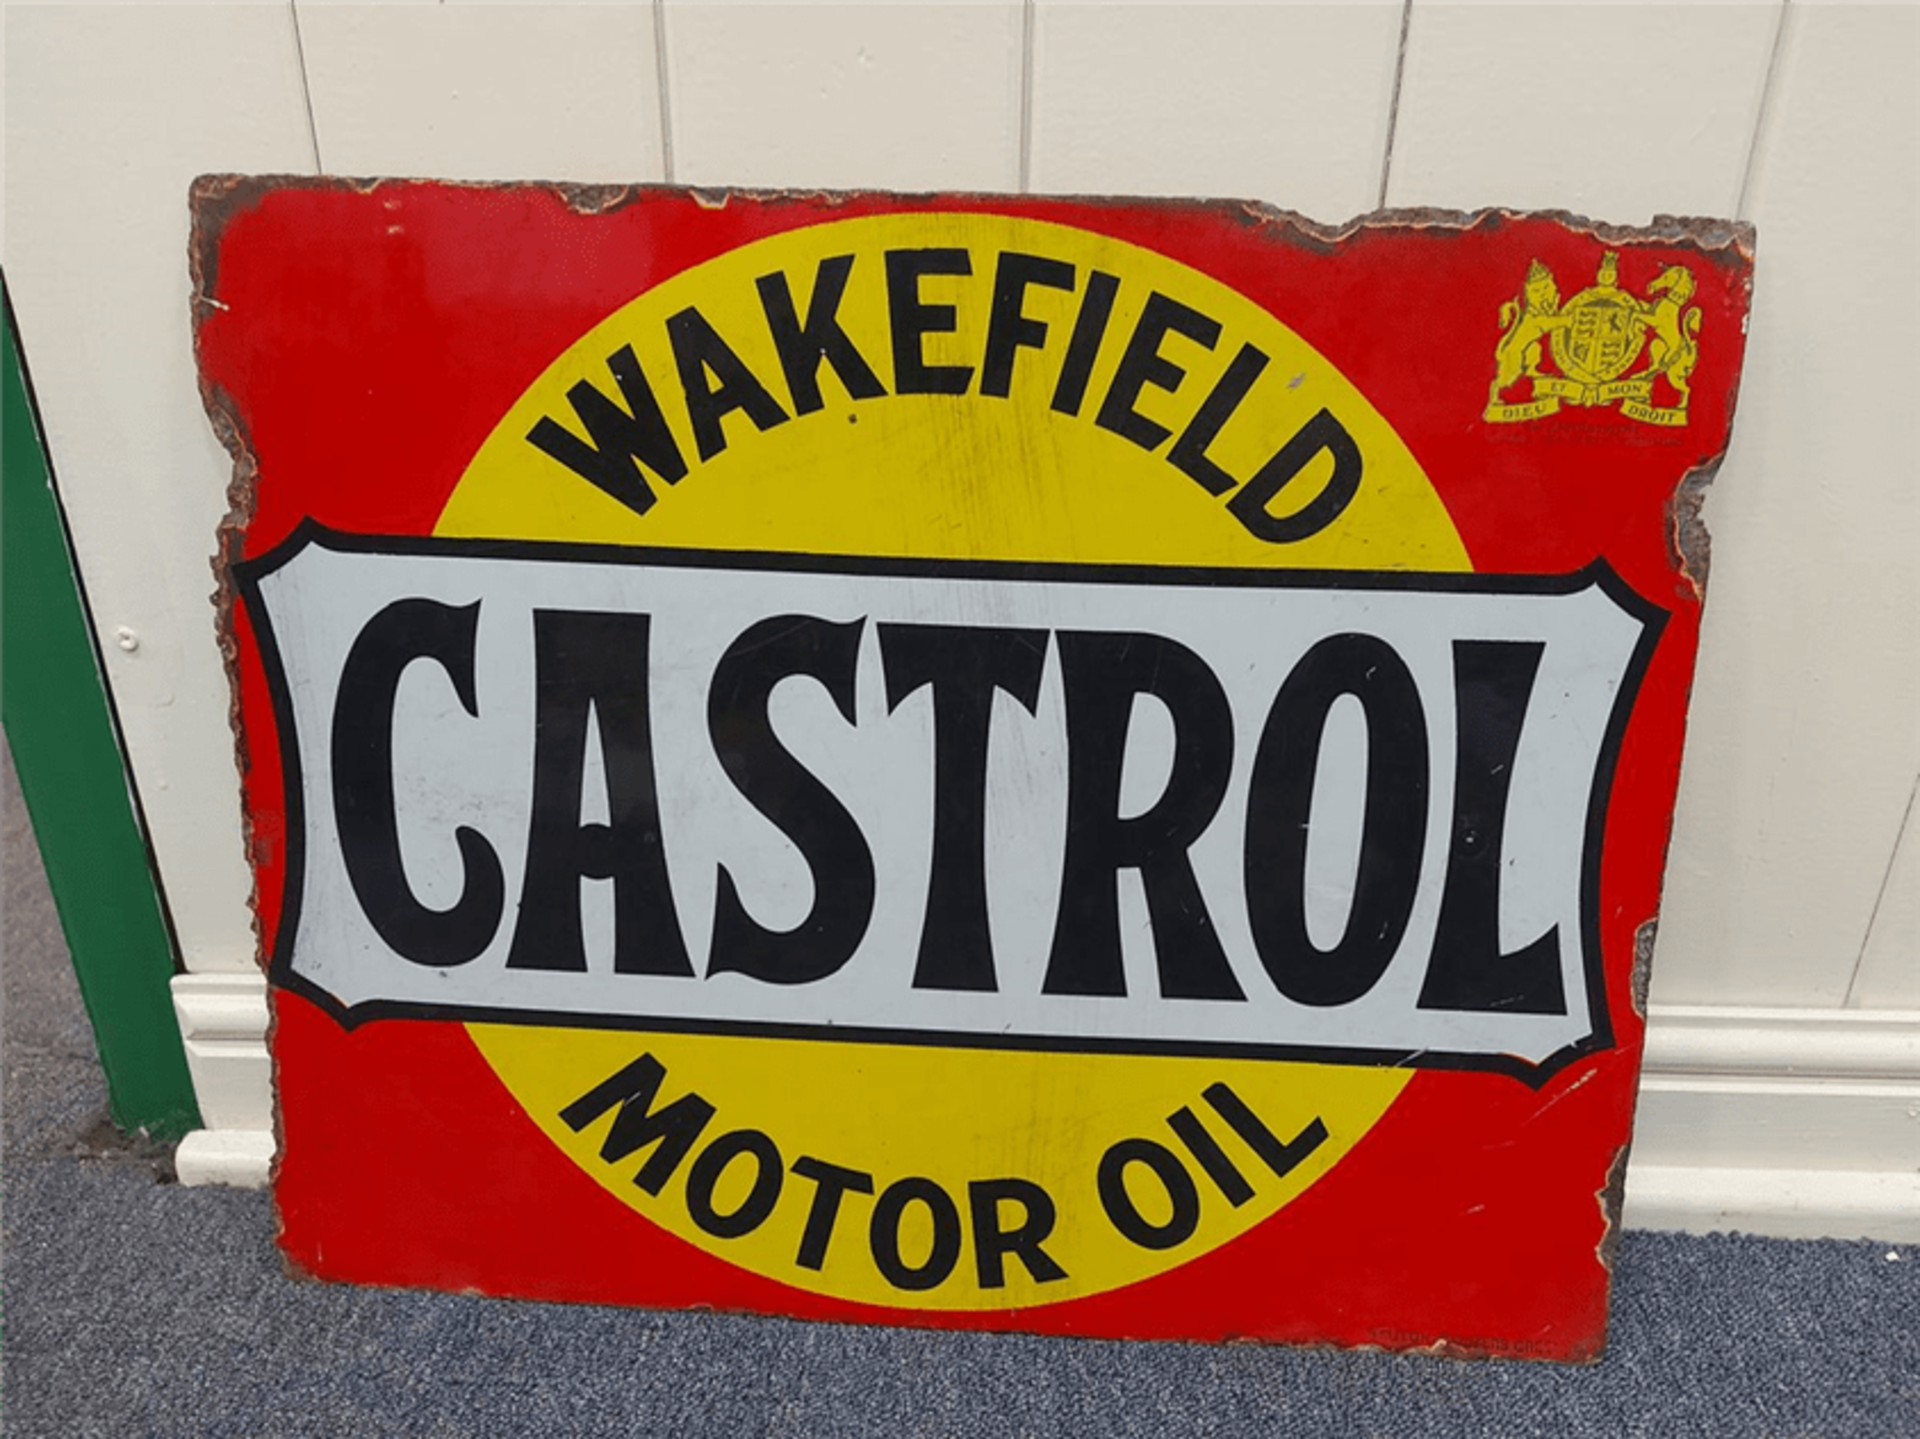 WAKEFIELD CASTROL MOTOR OIL SIGN